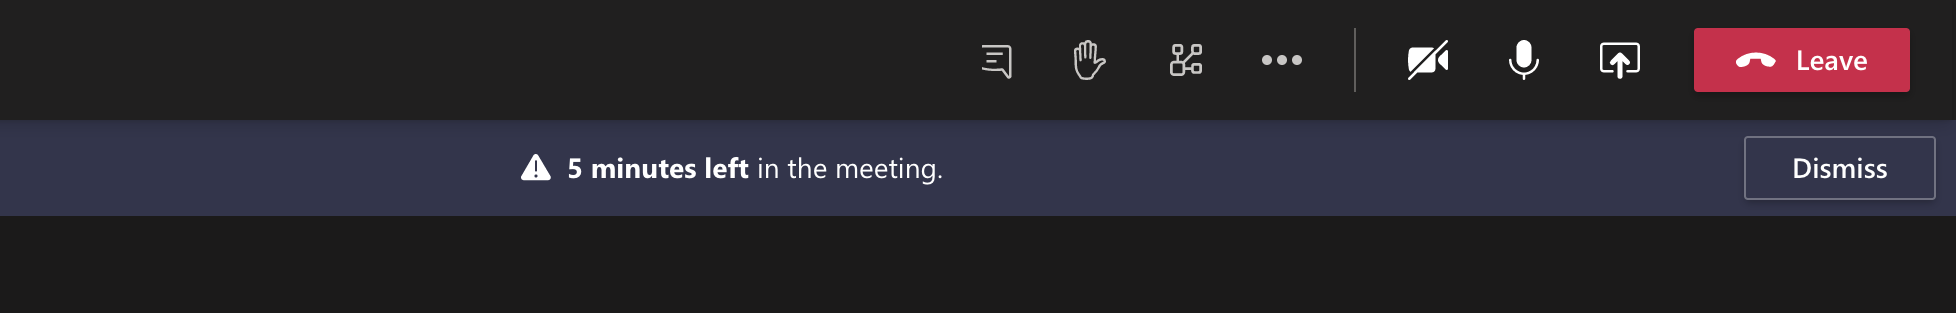 Microsoft Teams开始推出会议结束通知功能